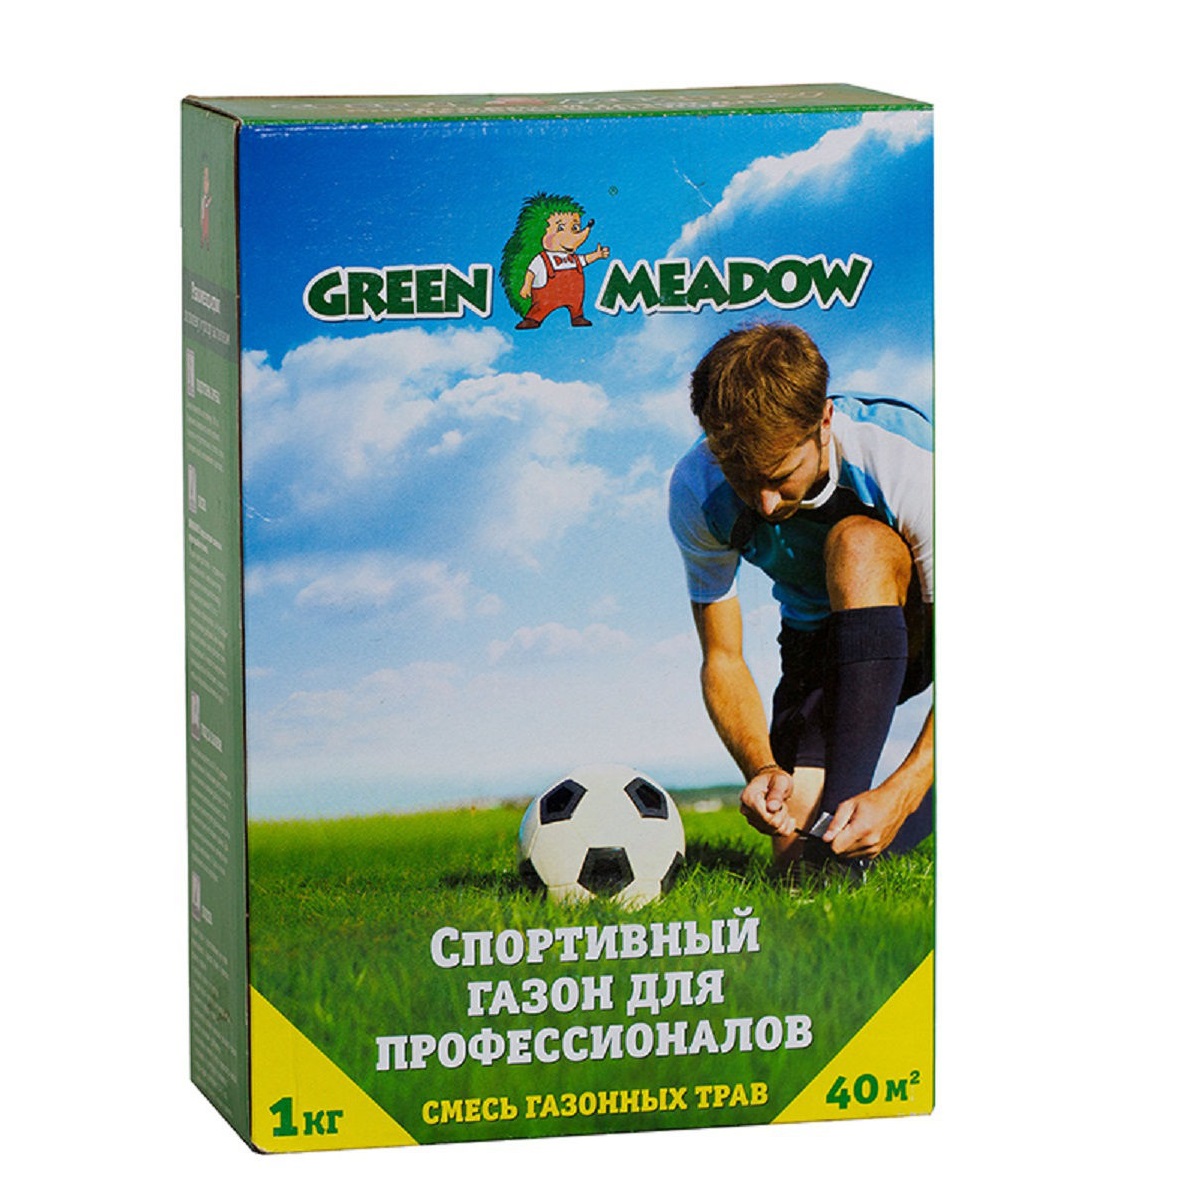 Газон Green Meadow спорт для профессионалов 1 кг газон green meadow спорт для профессионалов 1 кг